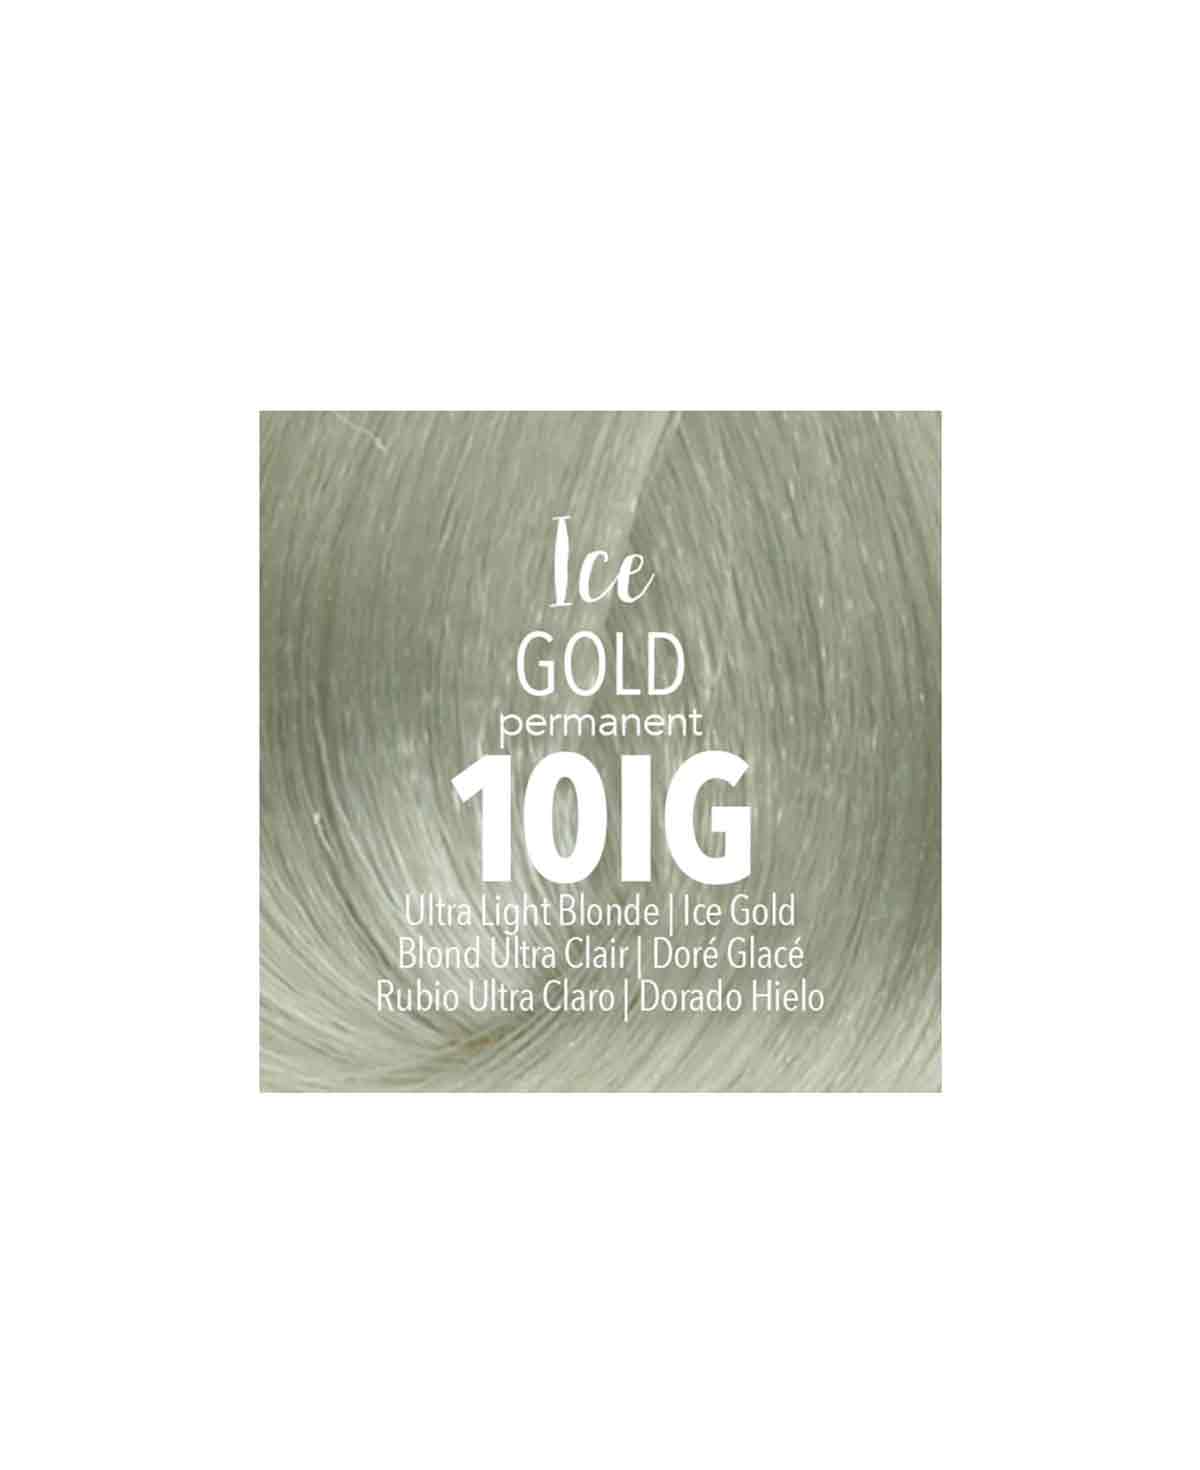 Mydentity - 10IG Ultra Light Blonde Ice Gold